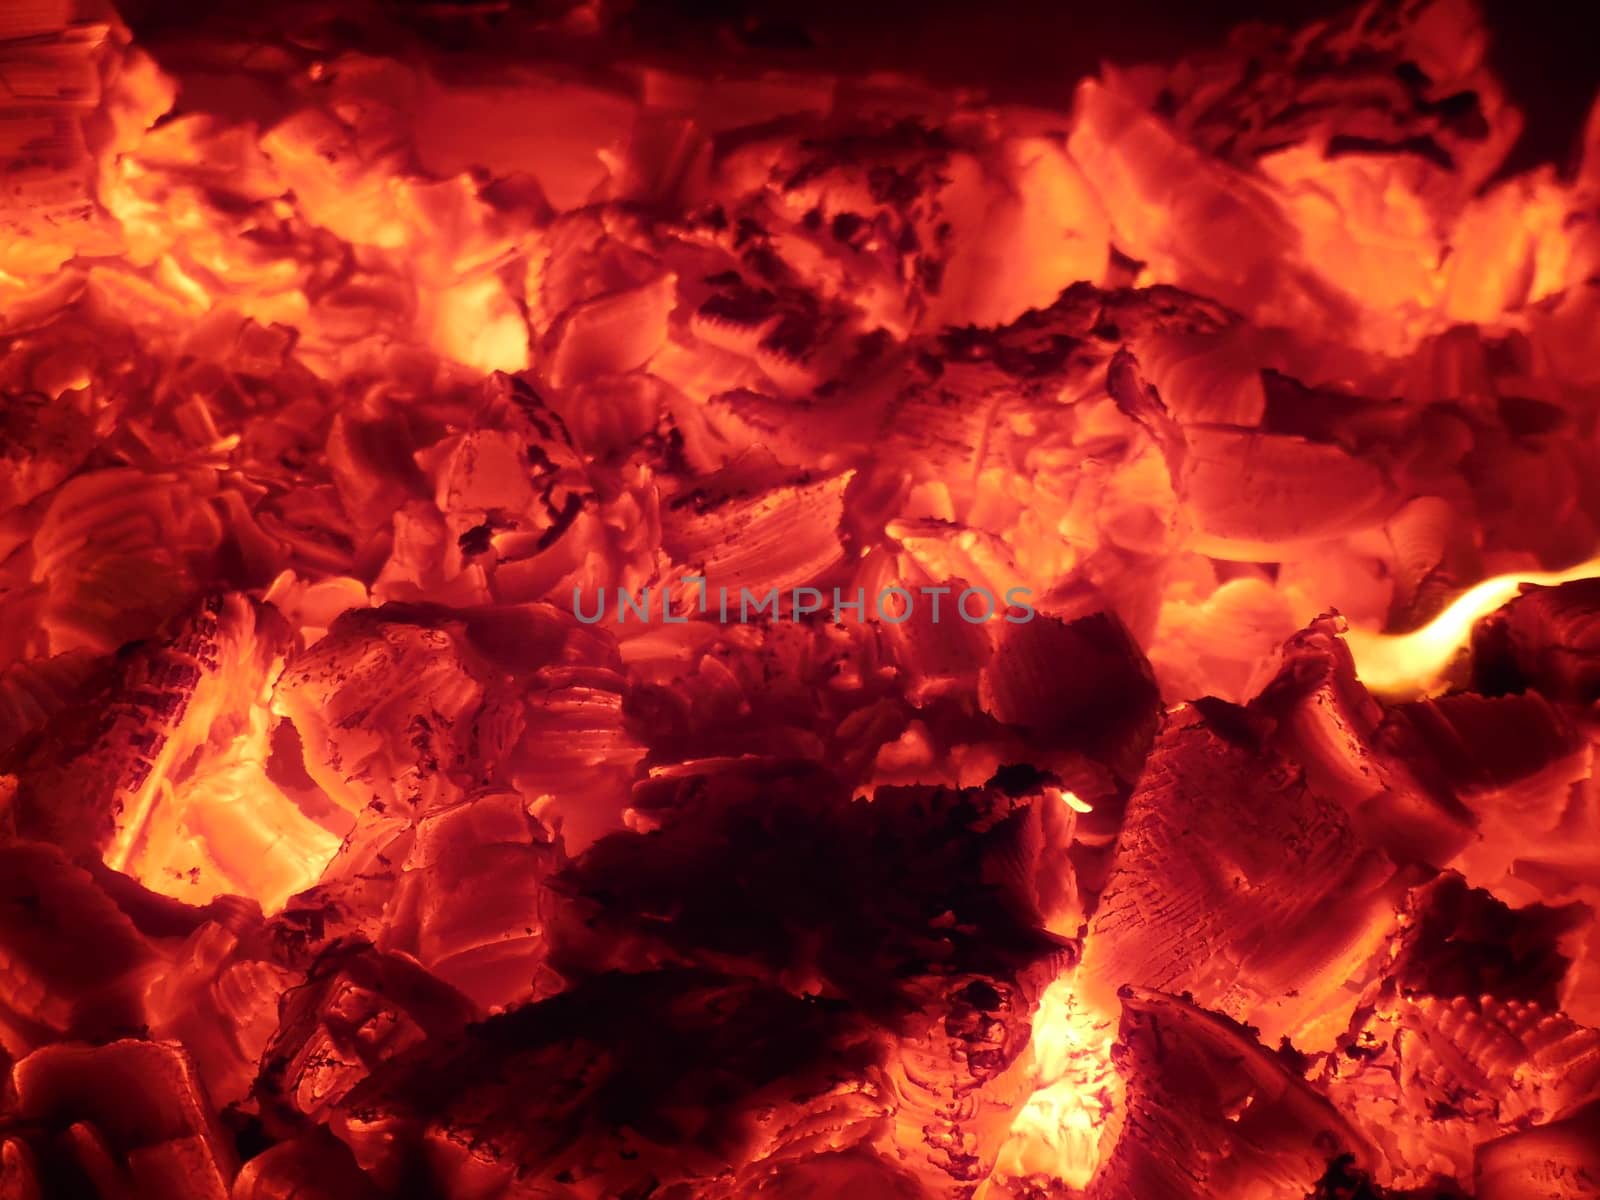 embers and the fire in the stove in Russian Karelia, February, 2015 by olga_ovchinnikova